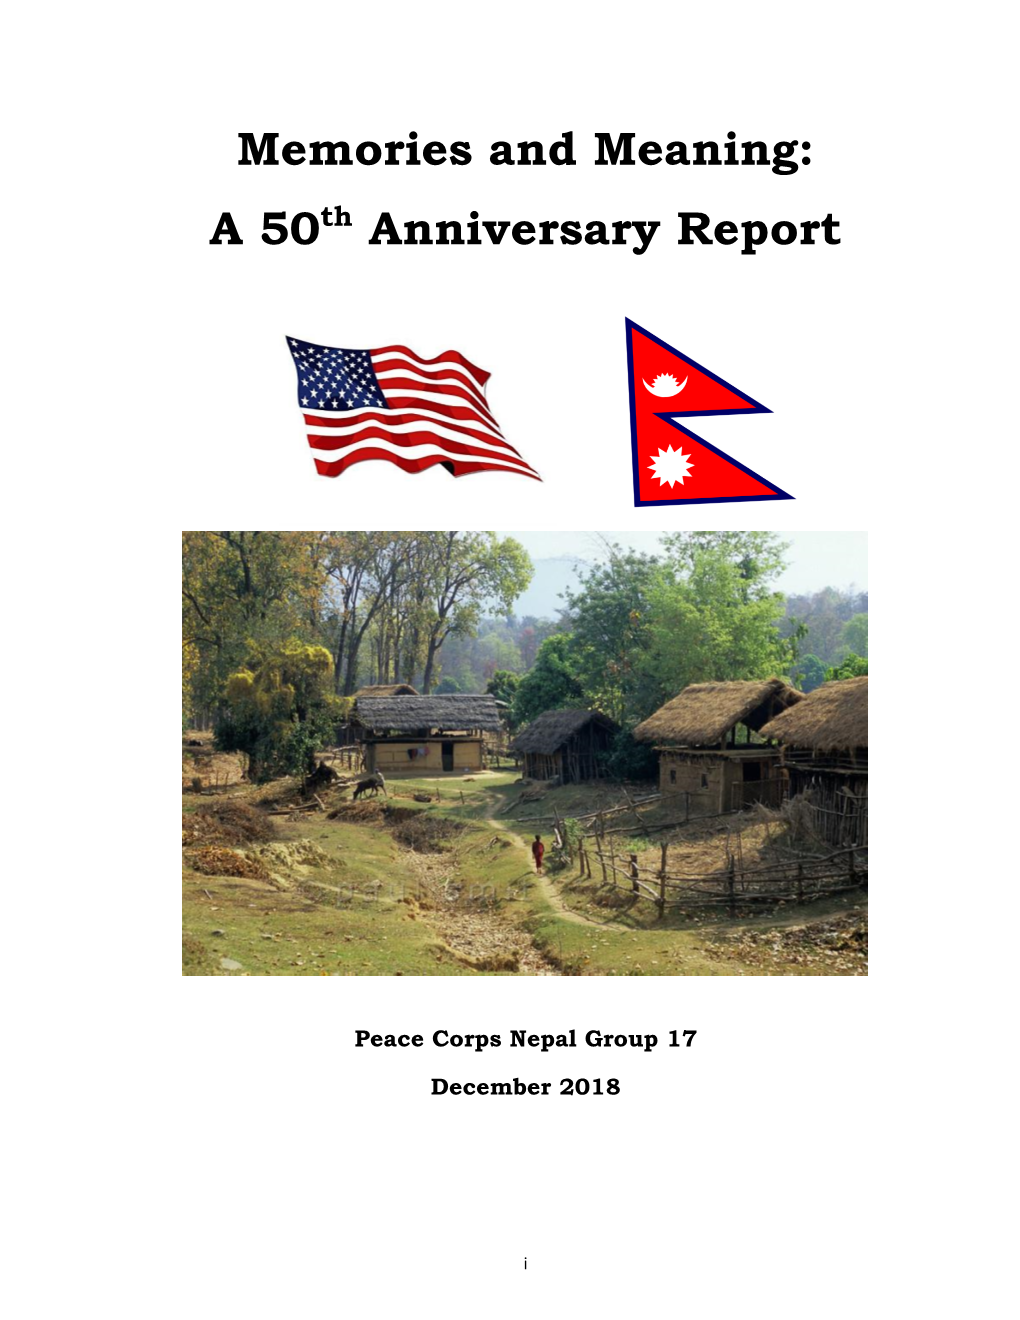 A 50Th Anniversary Report